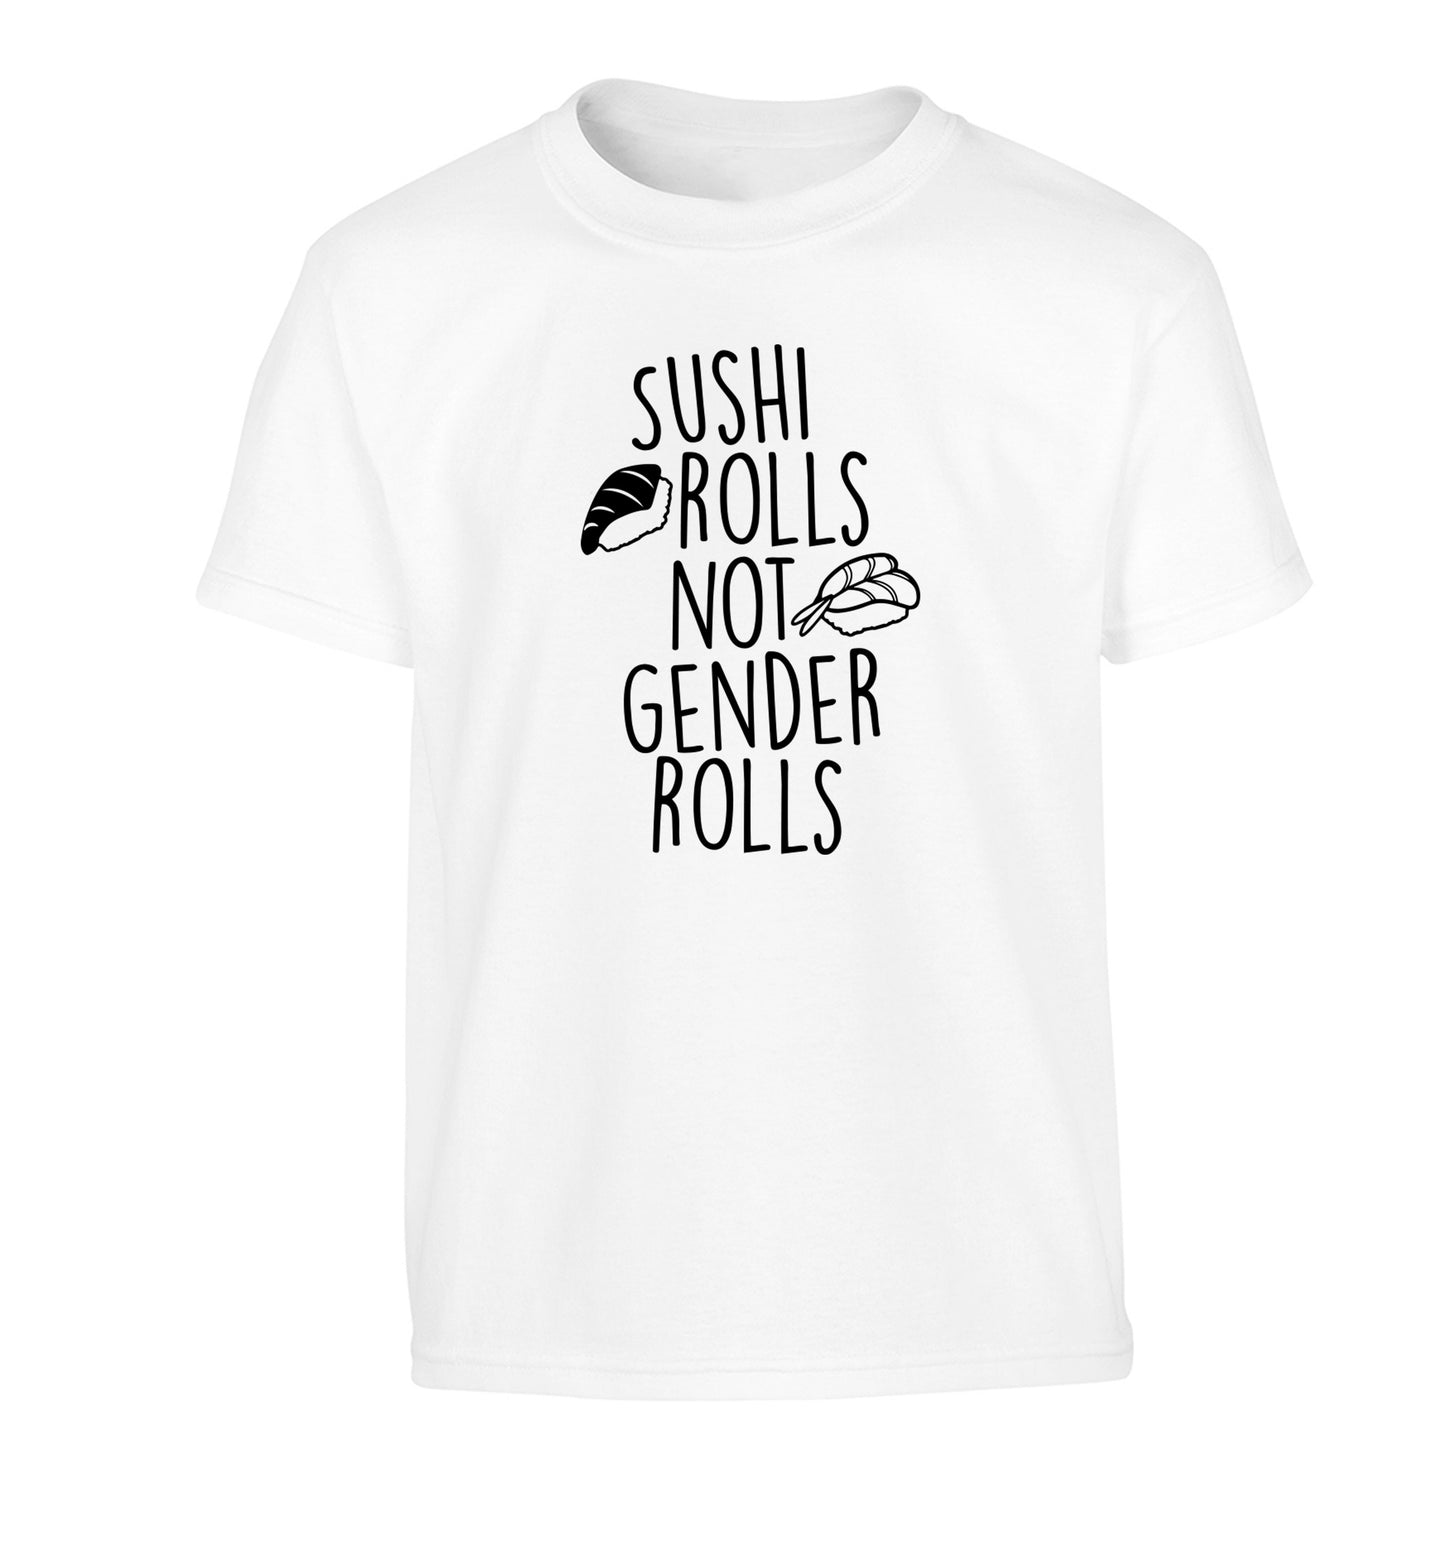 Sushi rolls not gender rolls Children's white Tshirt 12-14 Years